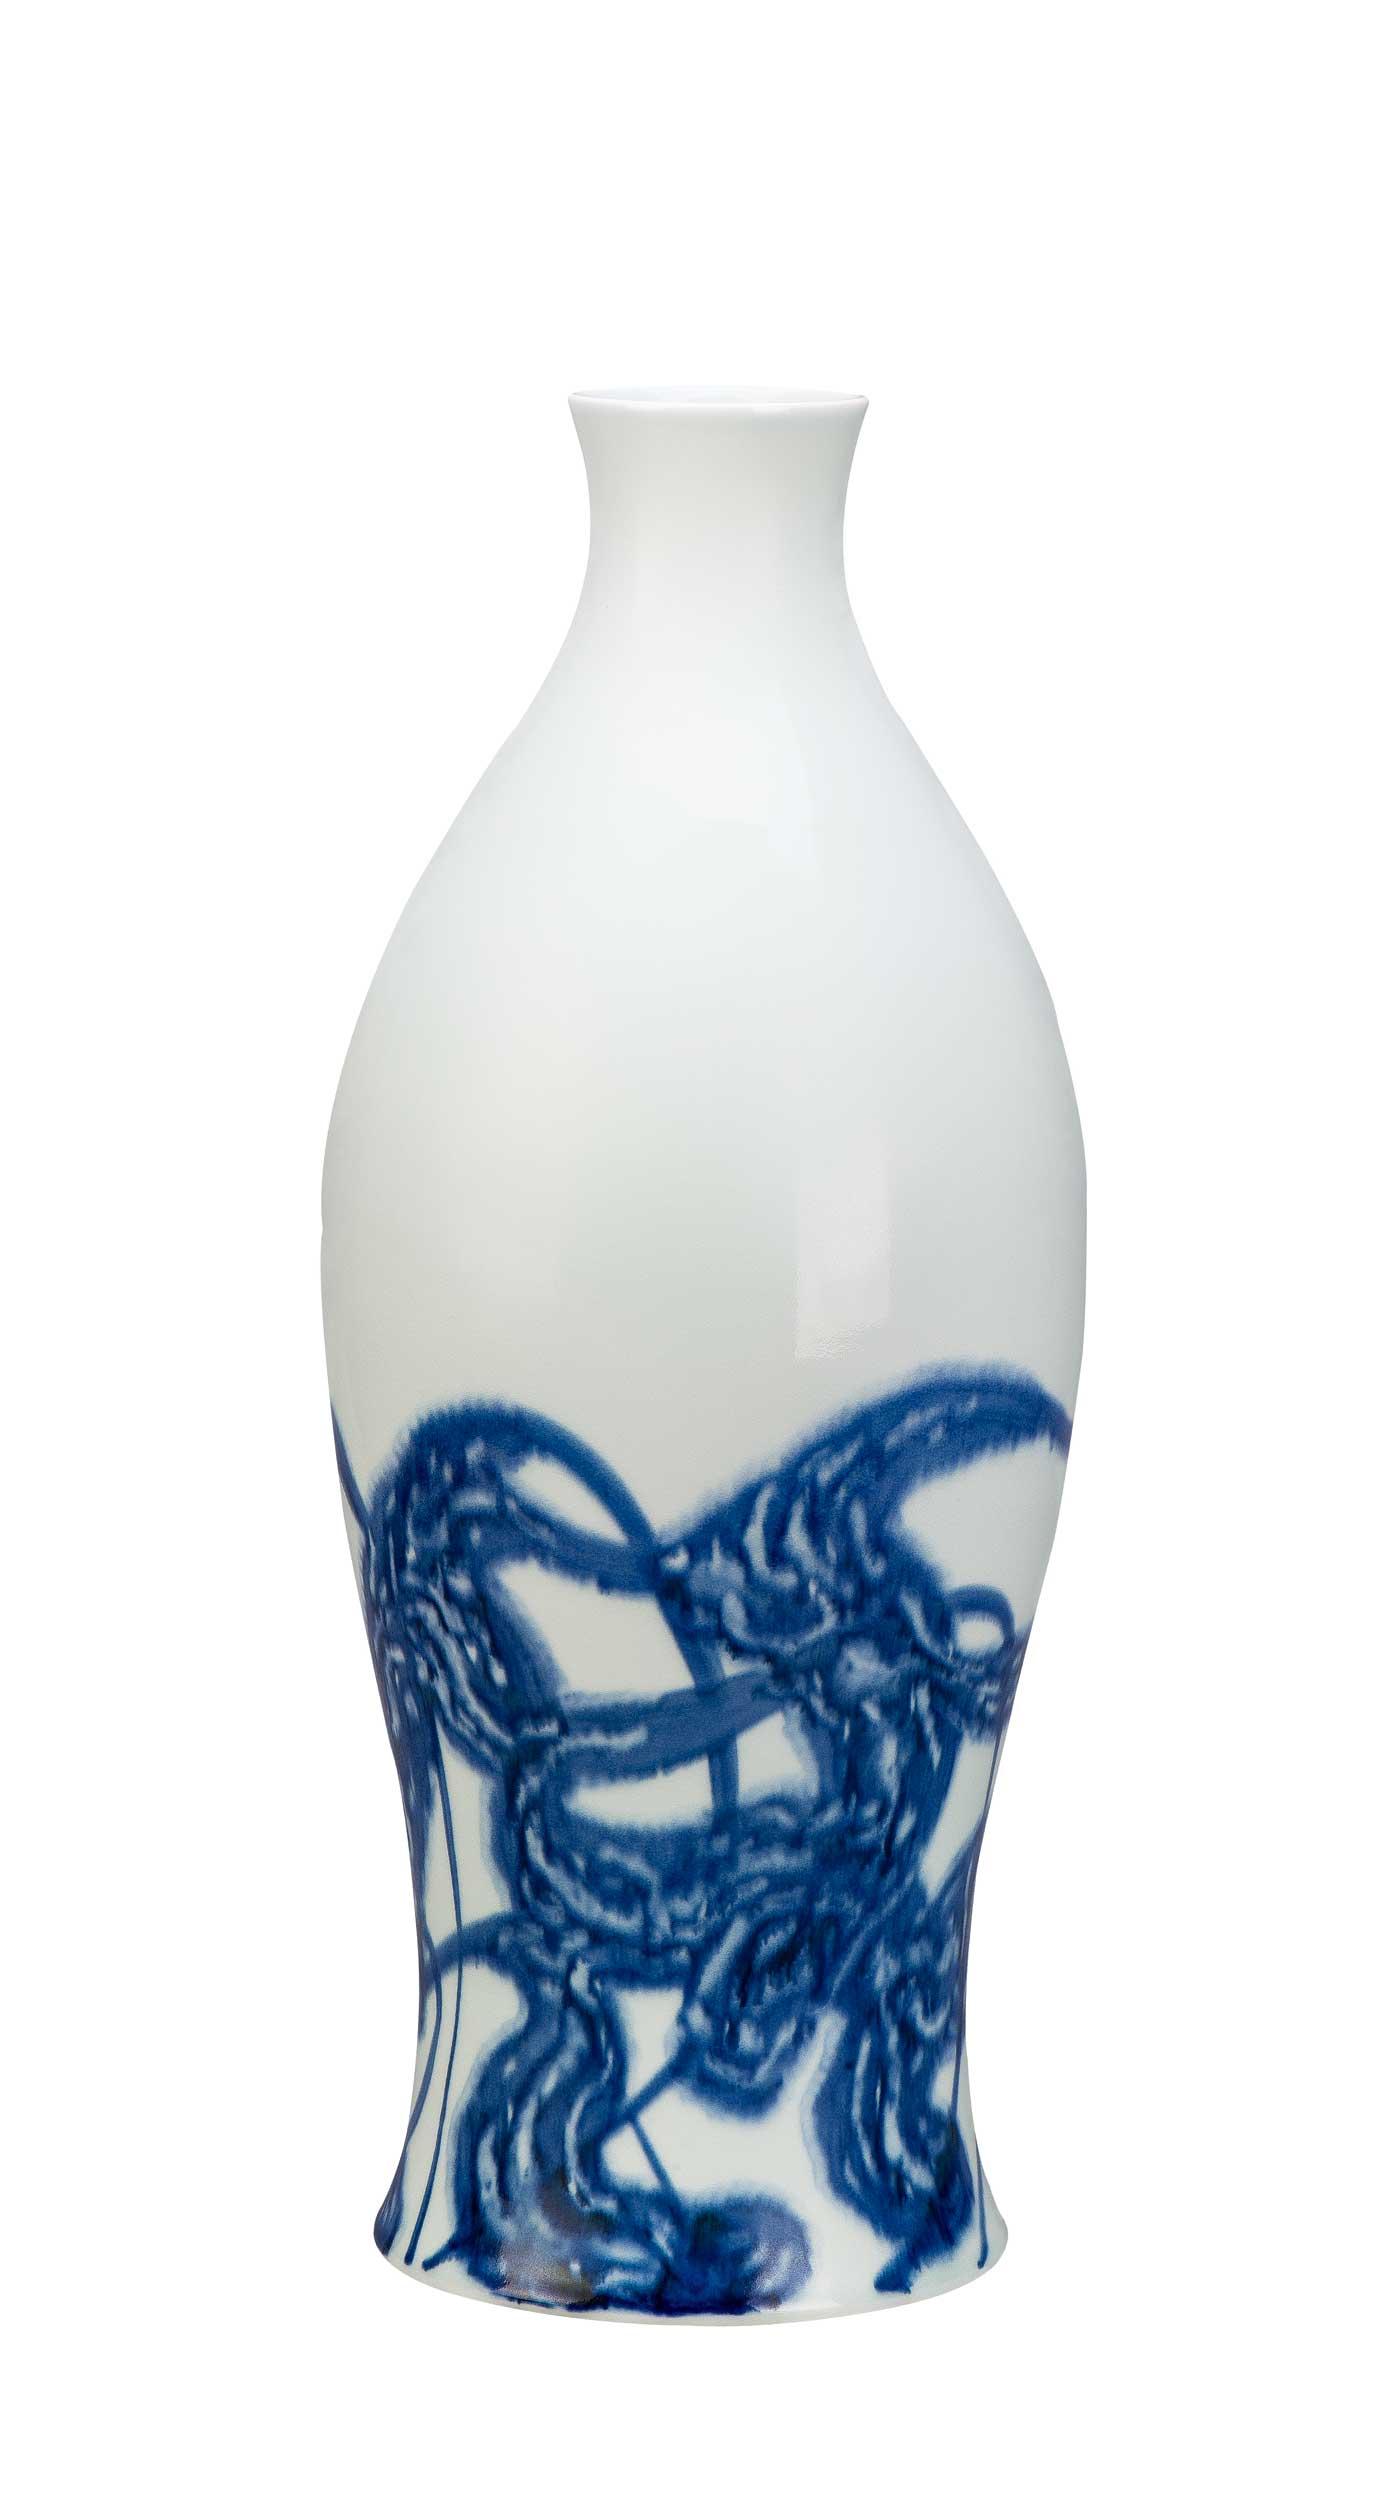 新梅瓶·青裙^_^A New Plum Vase·Blue Skirt